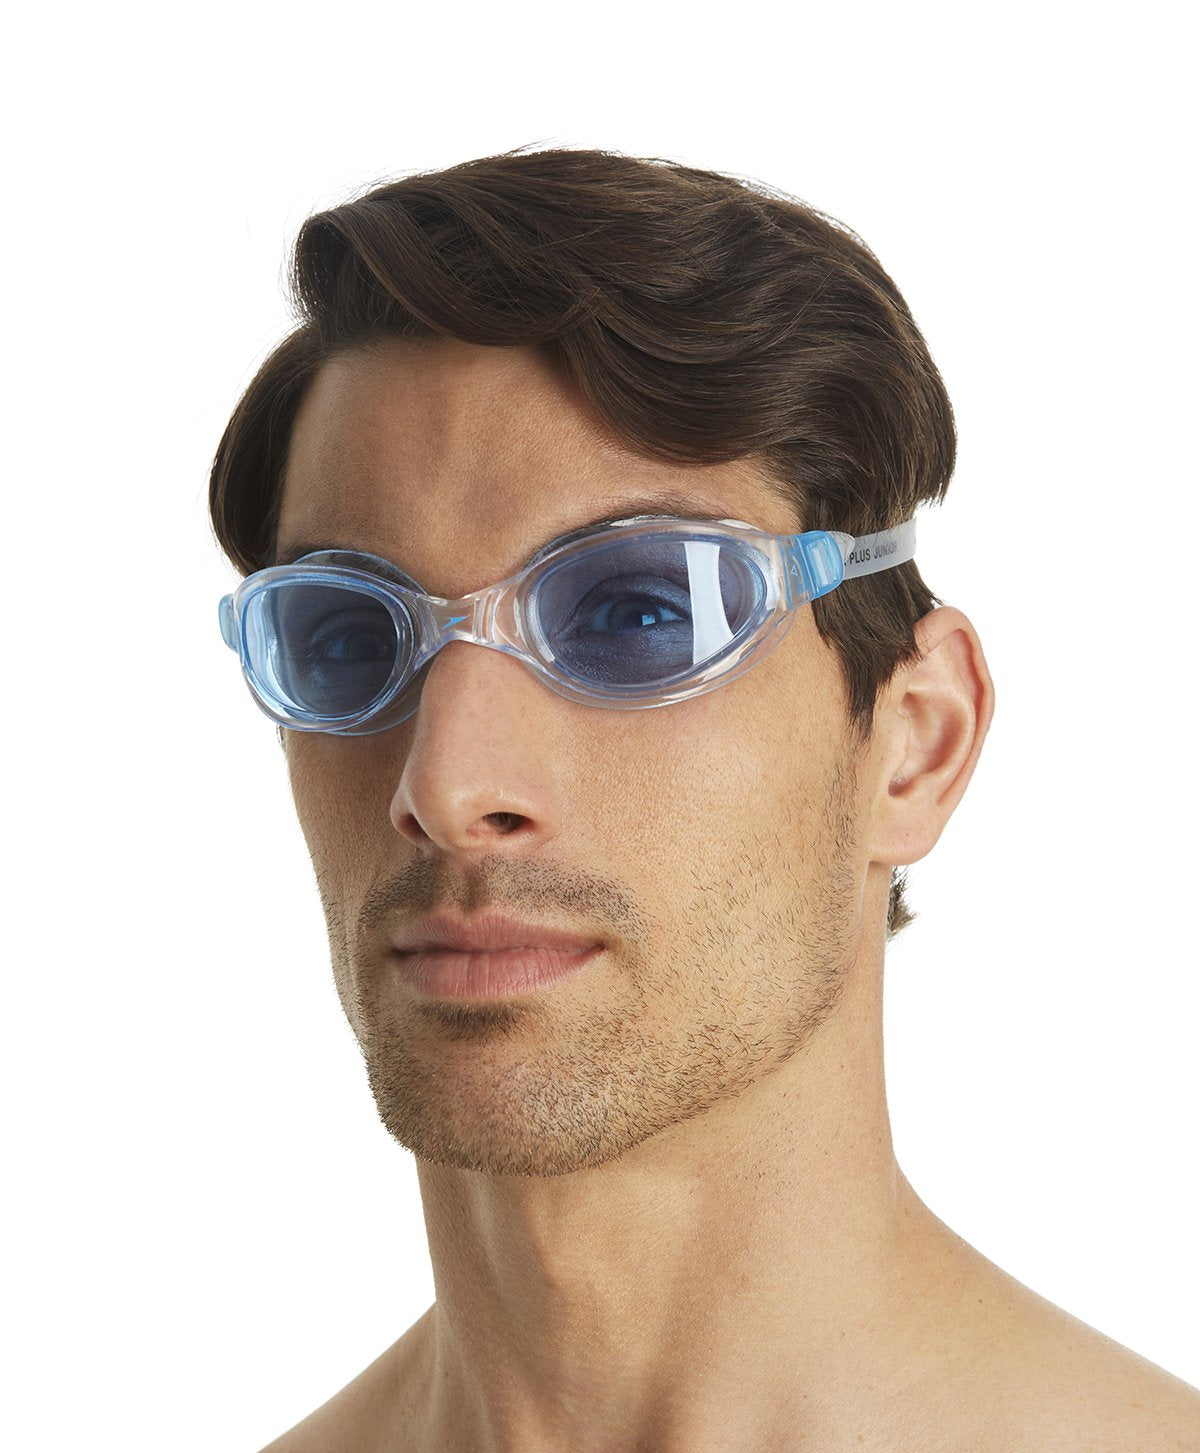 Speedo Unisex-Adult Futura Plus Goggles (Clear/Blue) - Best Price online Prokicksports.com